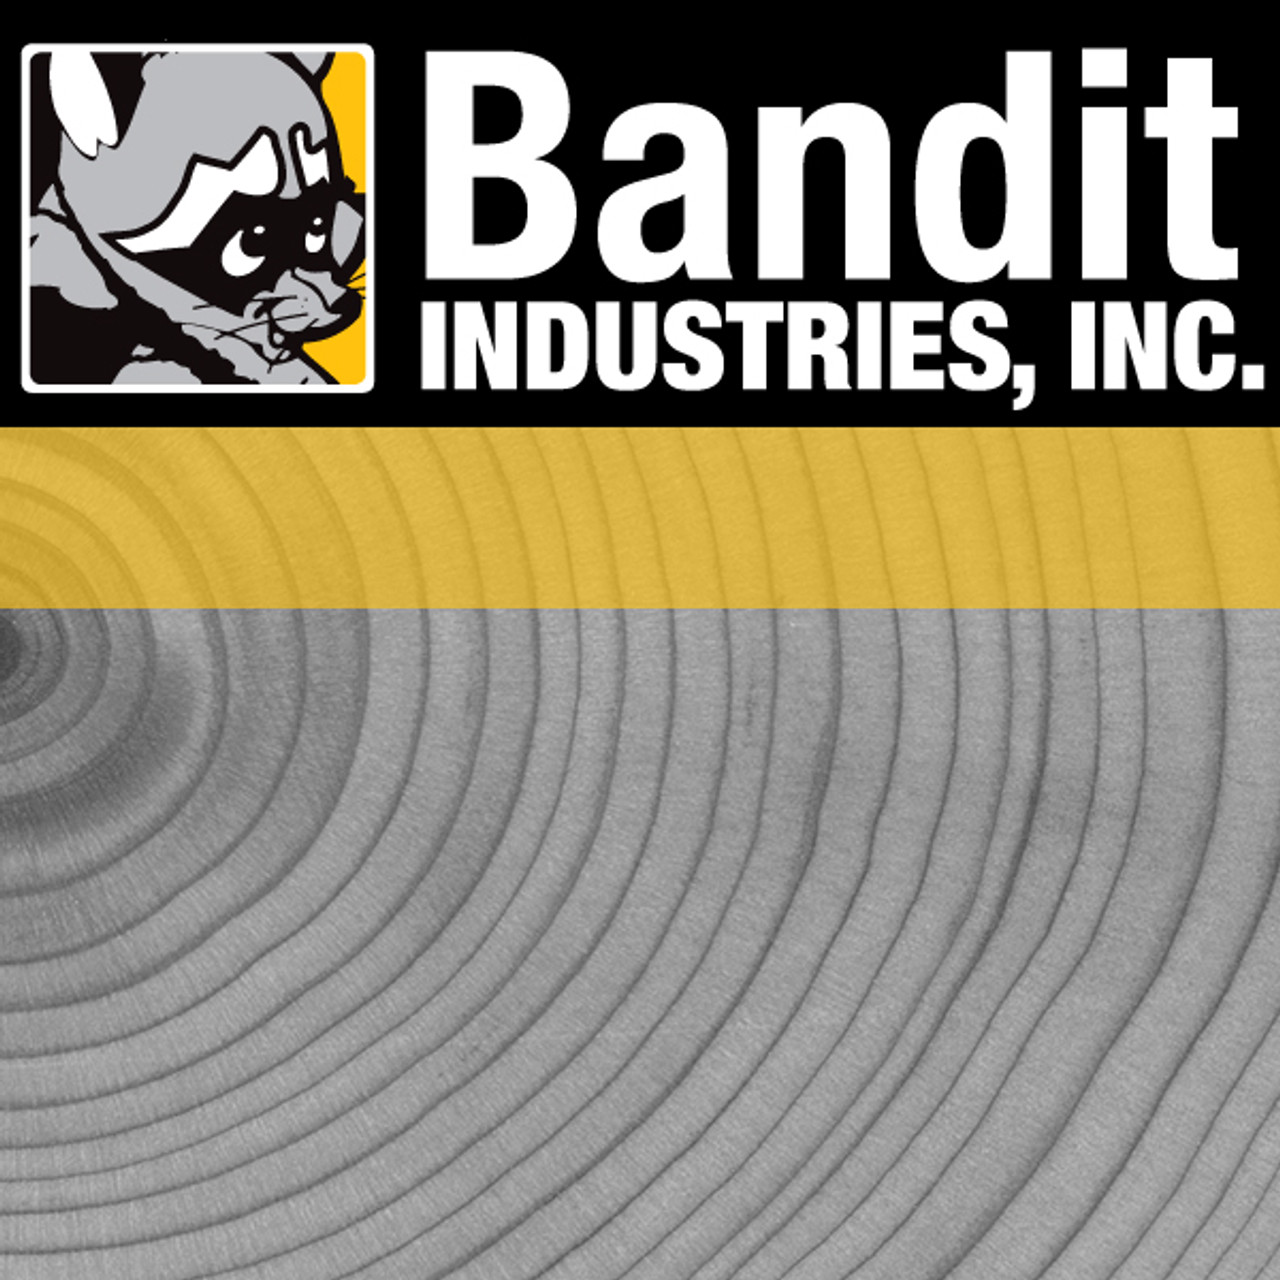 908-3002-17: BANDIT 74.3 HP ENGINE RAIL RAD. END